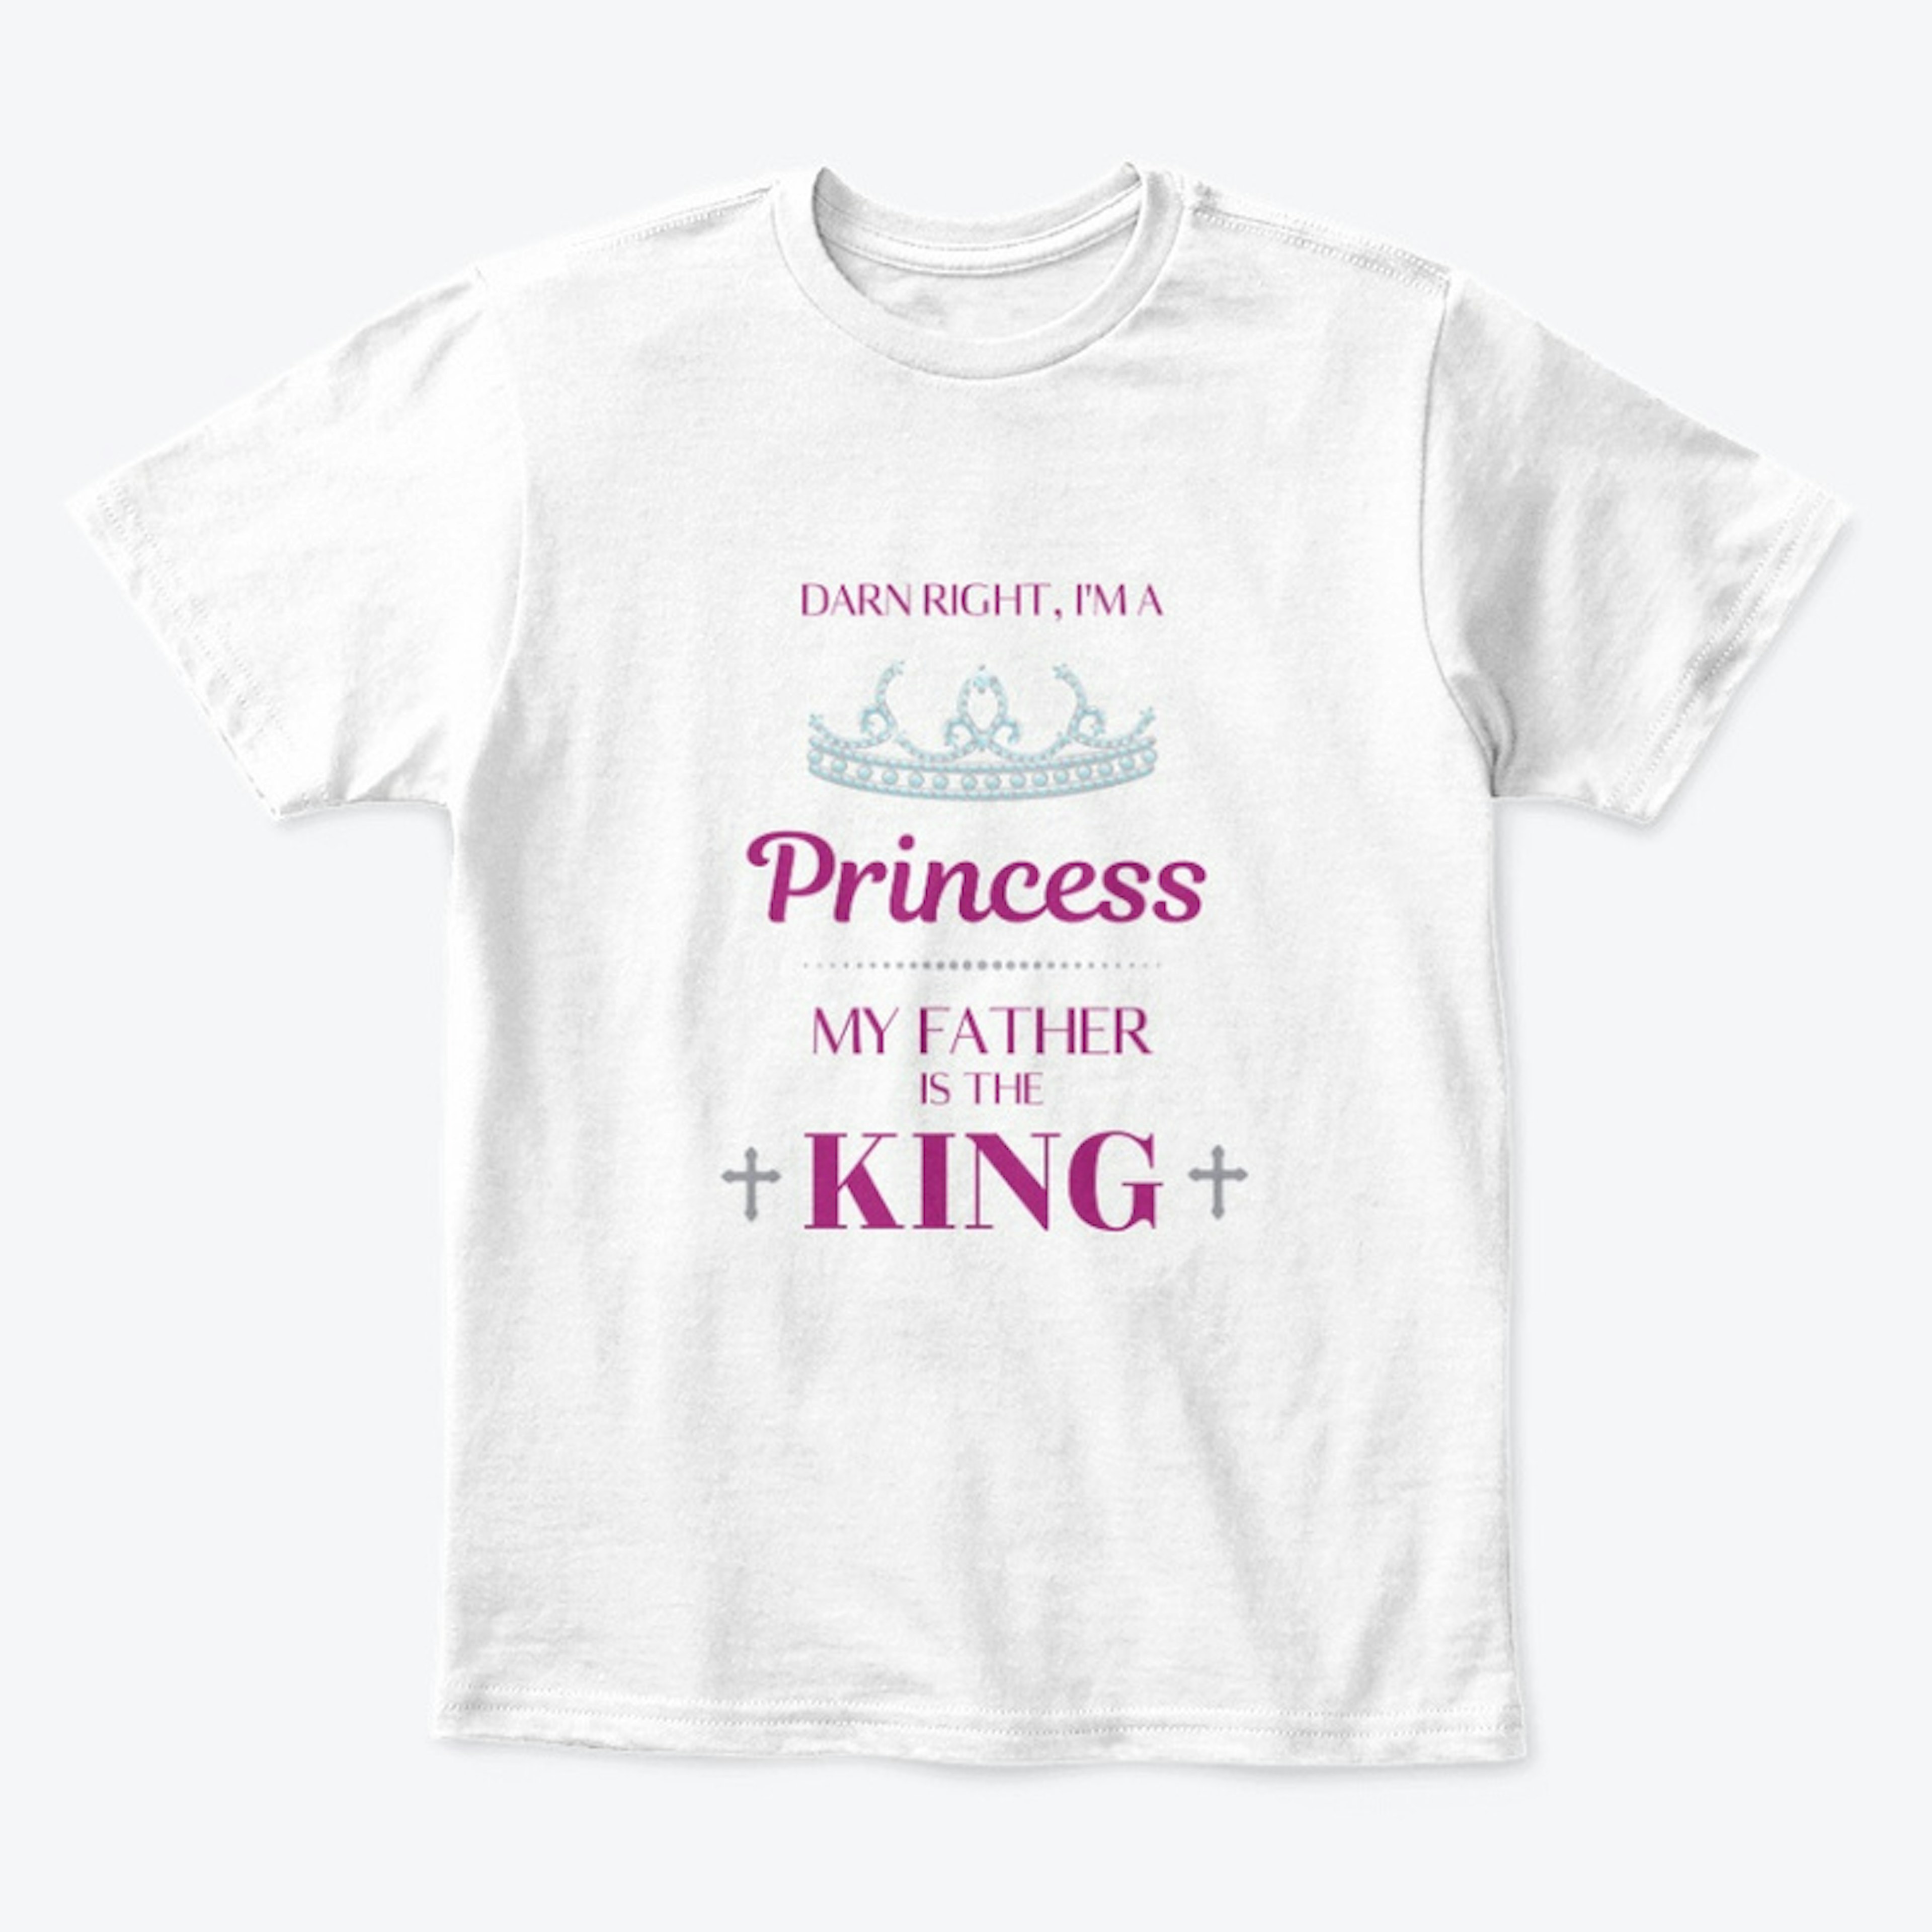 I'm a Princess Kids' T-Shirt